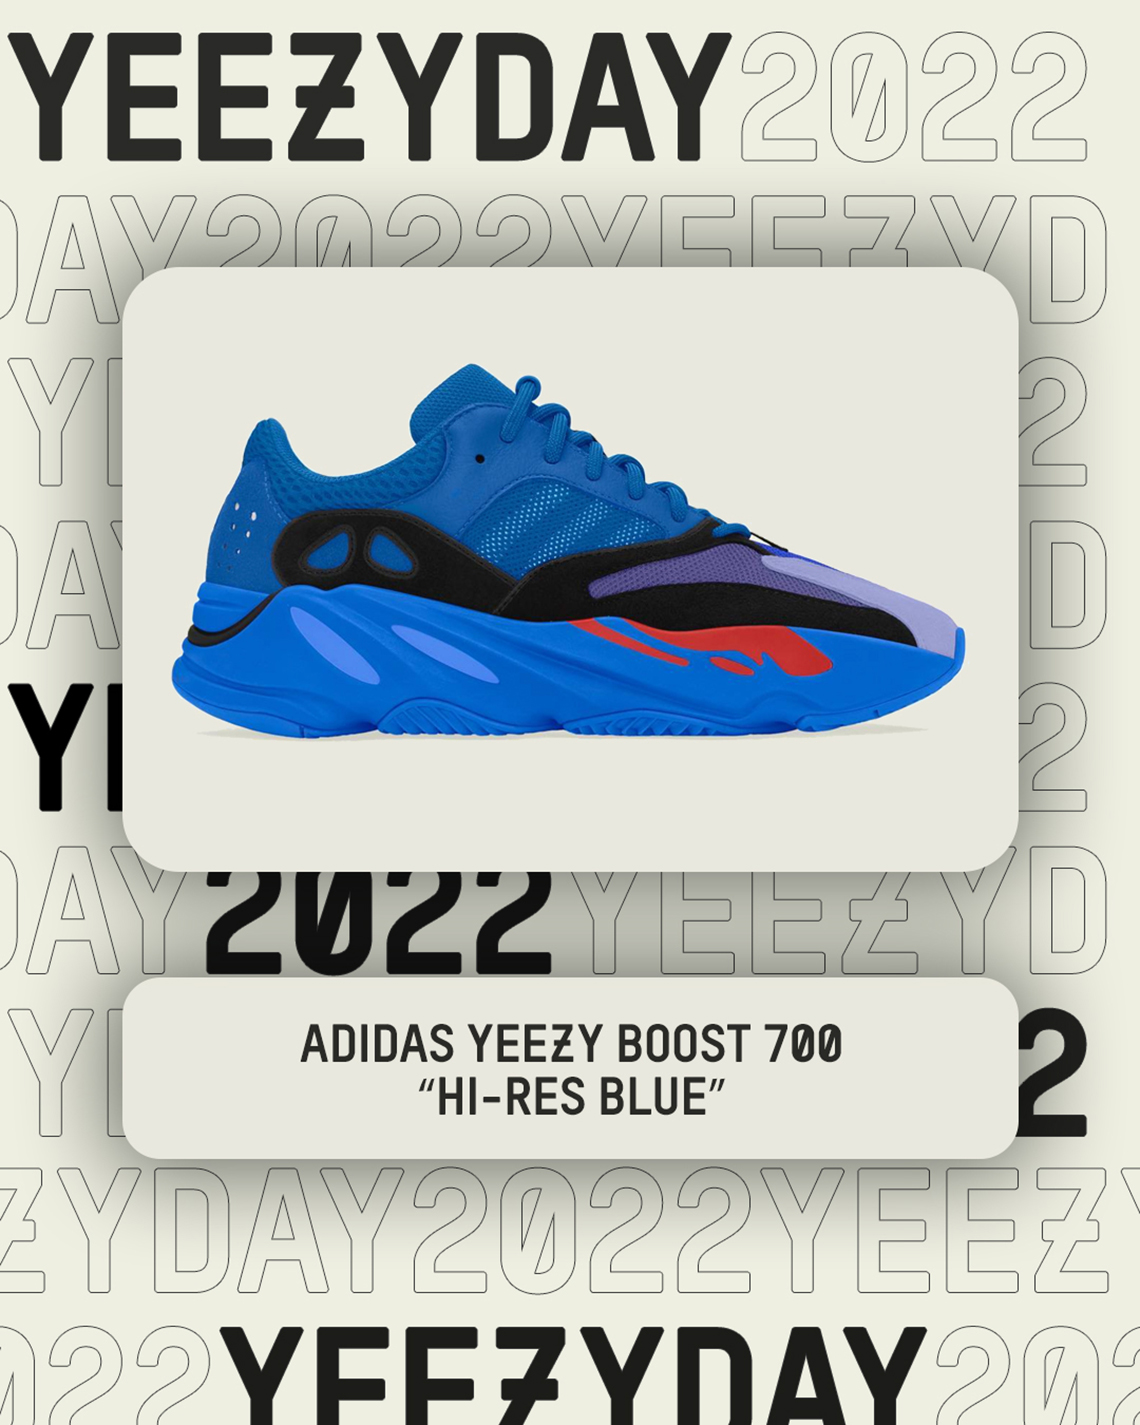 Yeezy Day 2022 footwear adidas terrex free hiker primeblu fz3626 blue Hi Res Blue